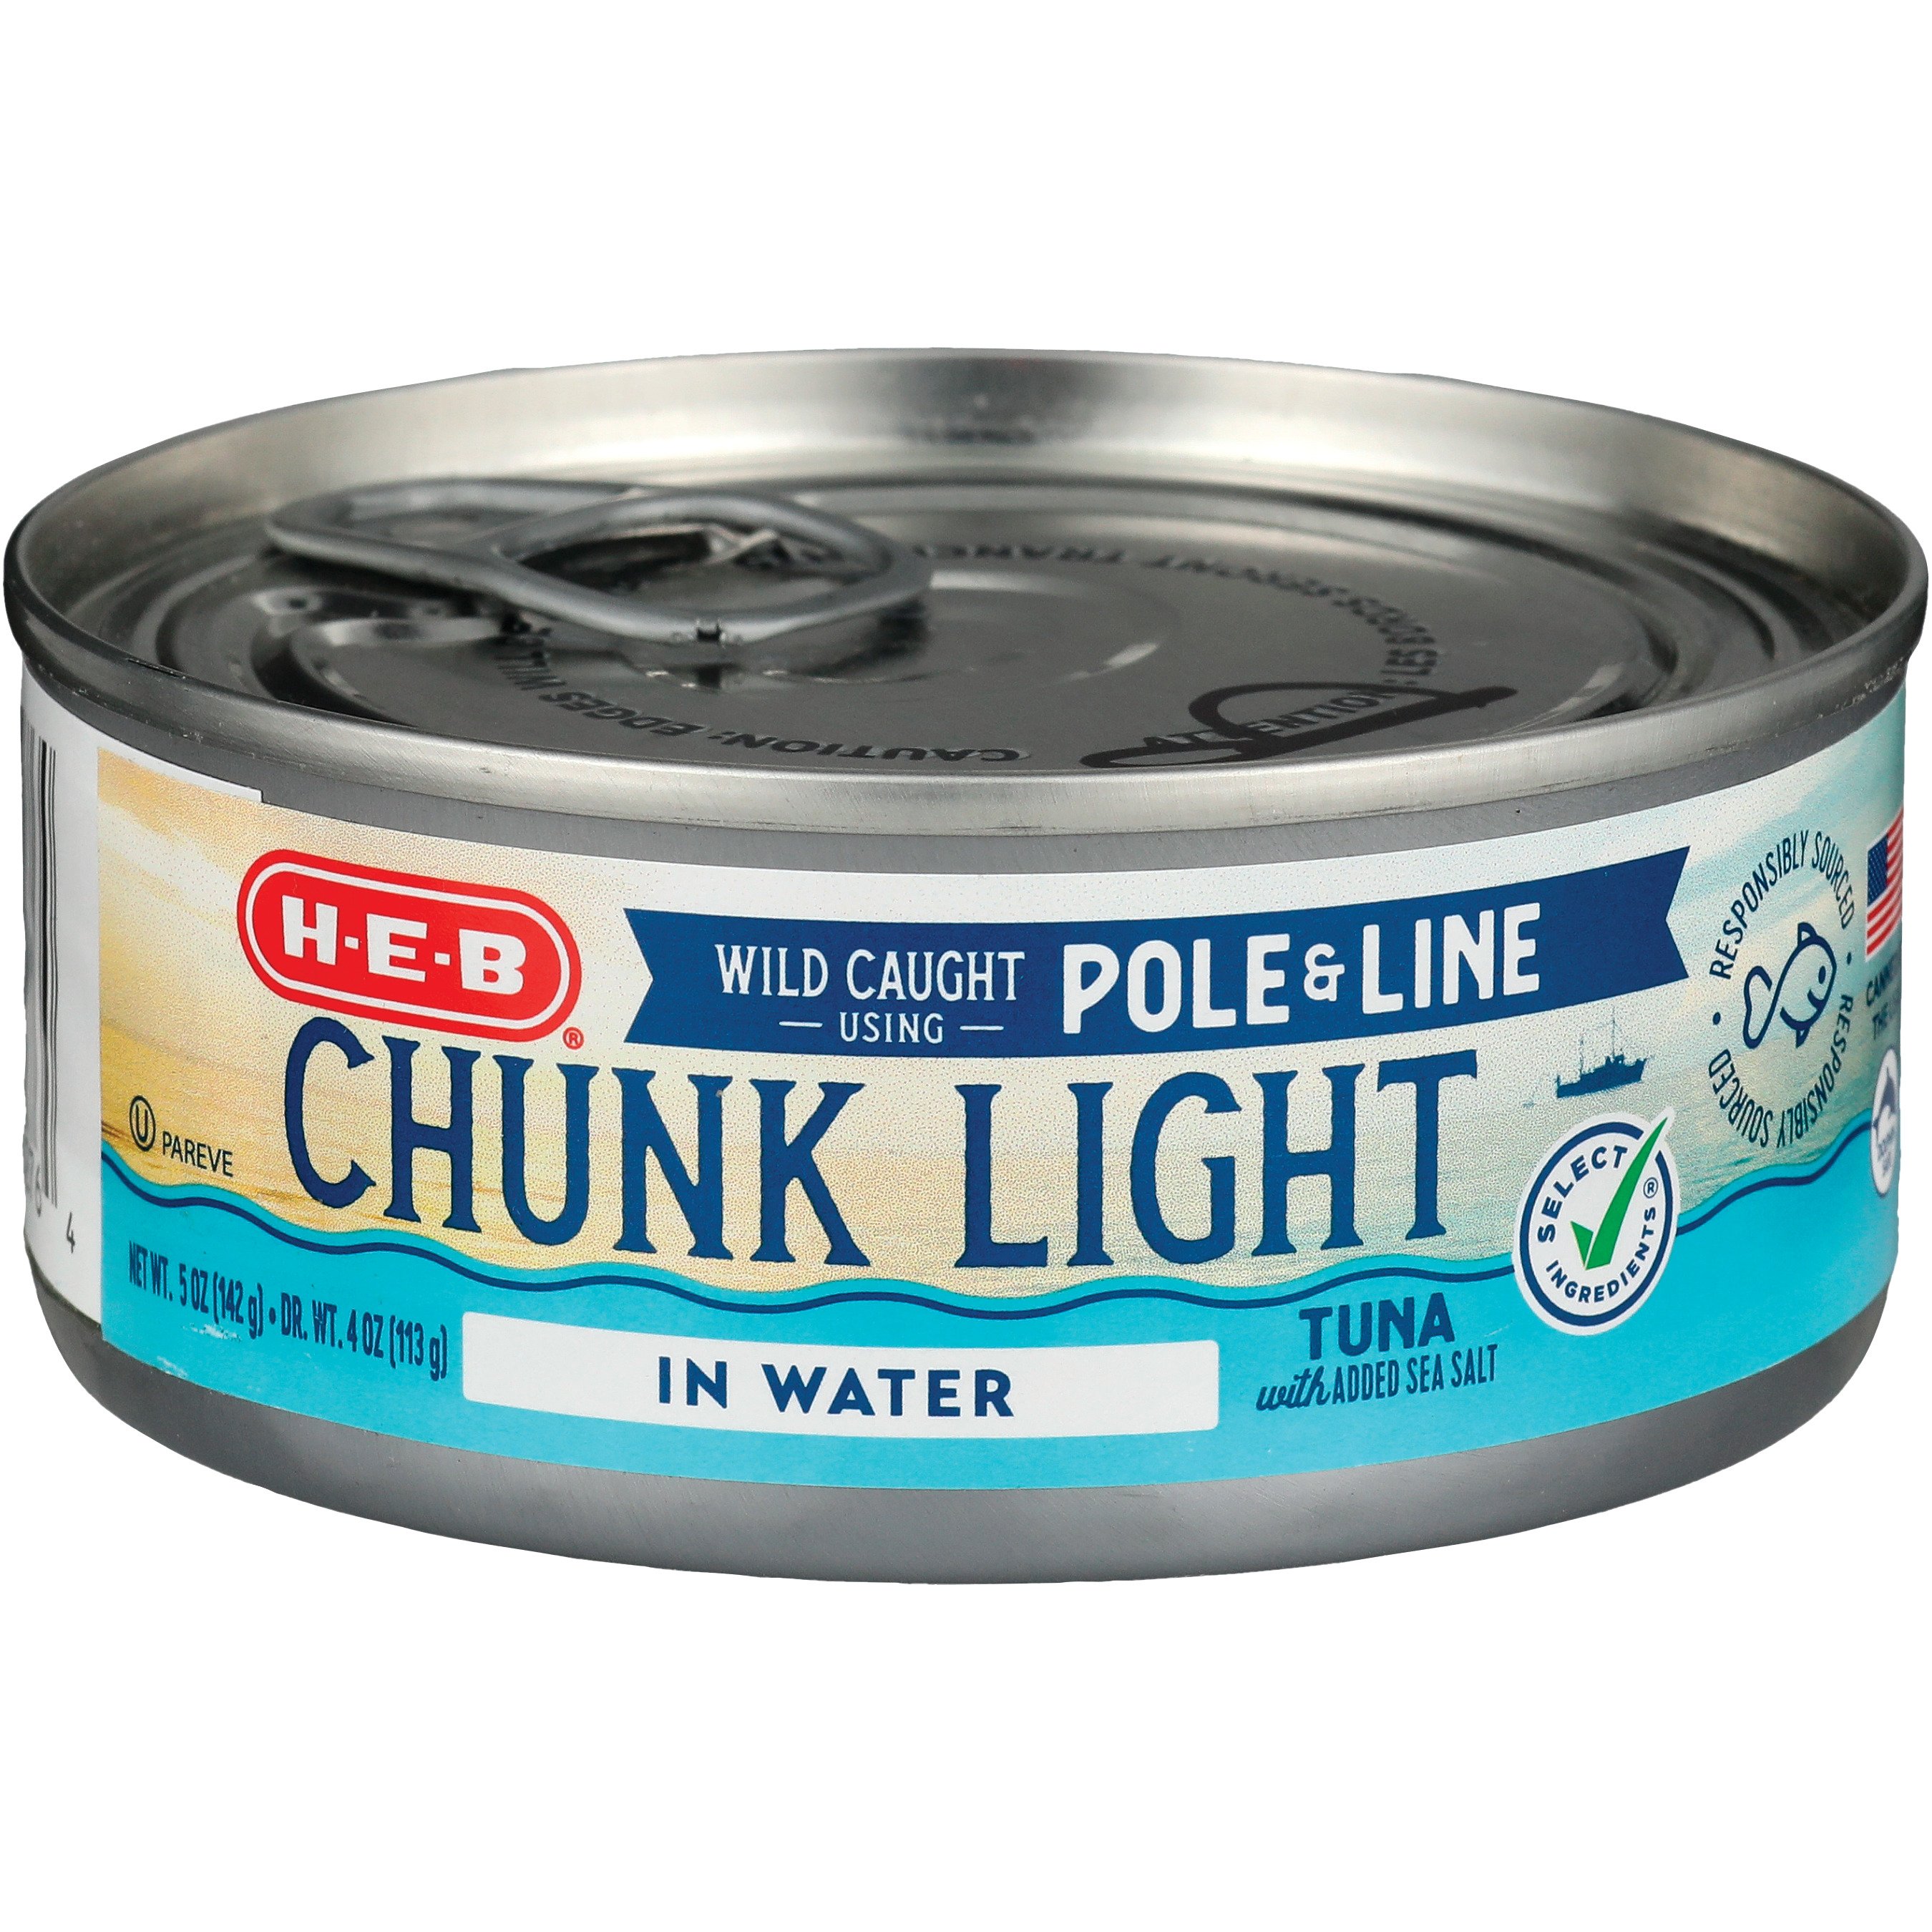 The Pole & Line fishing - CannedFish